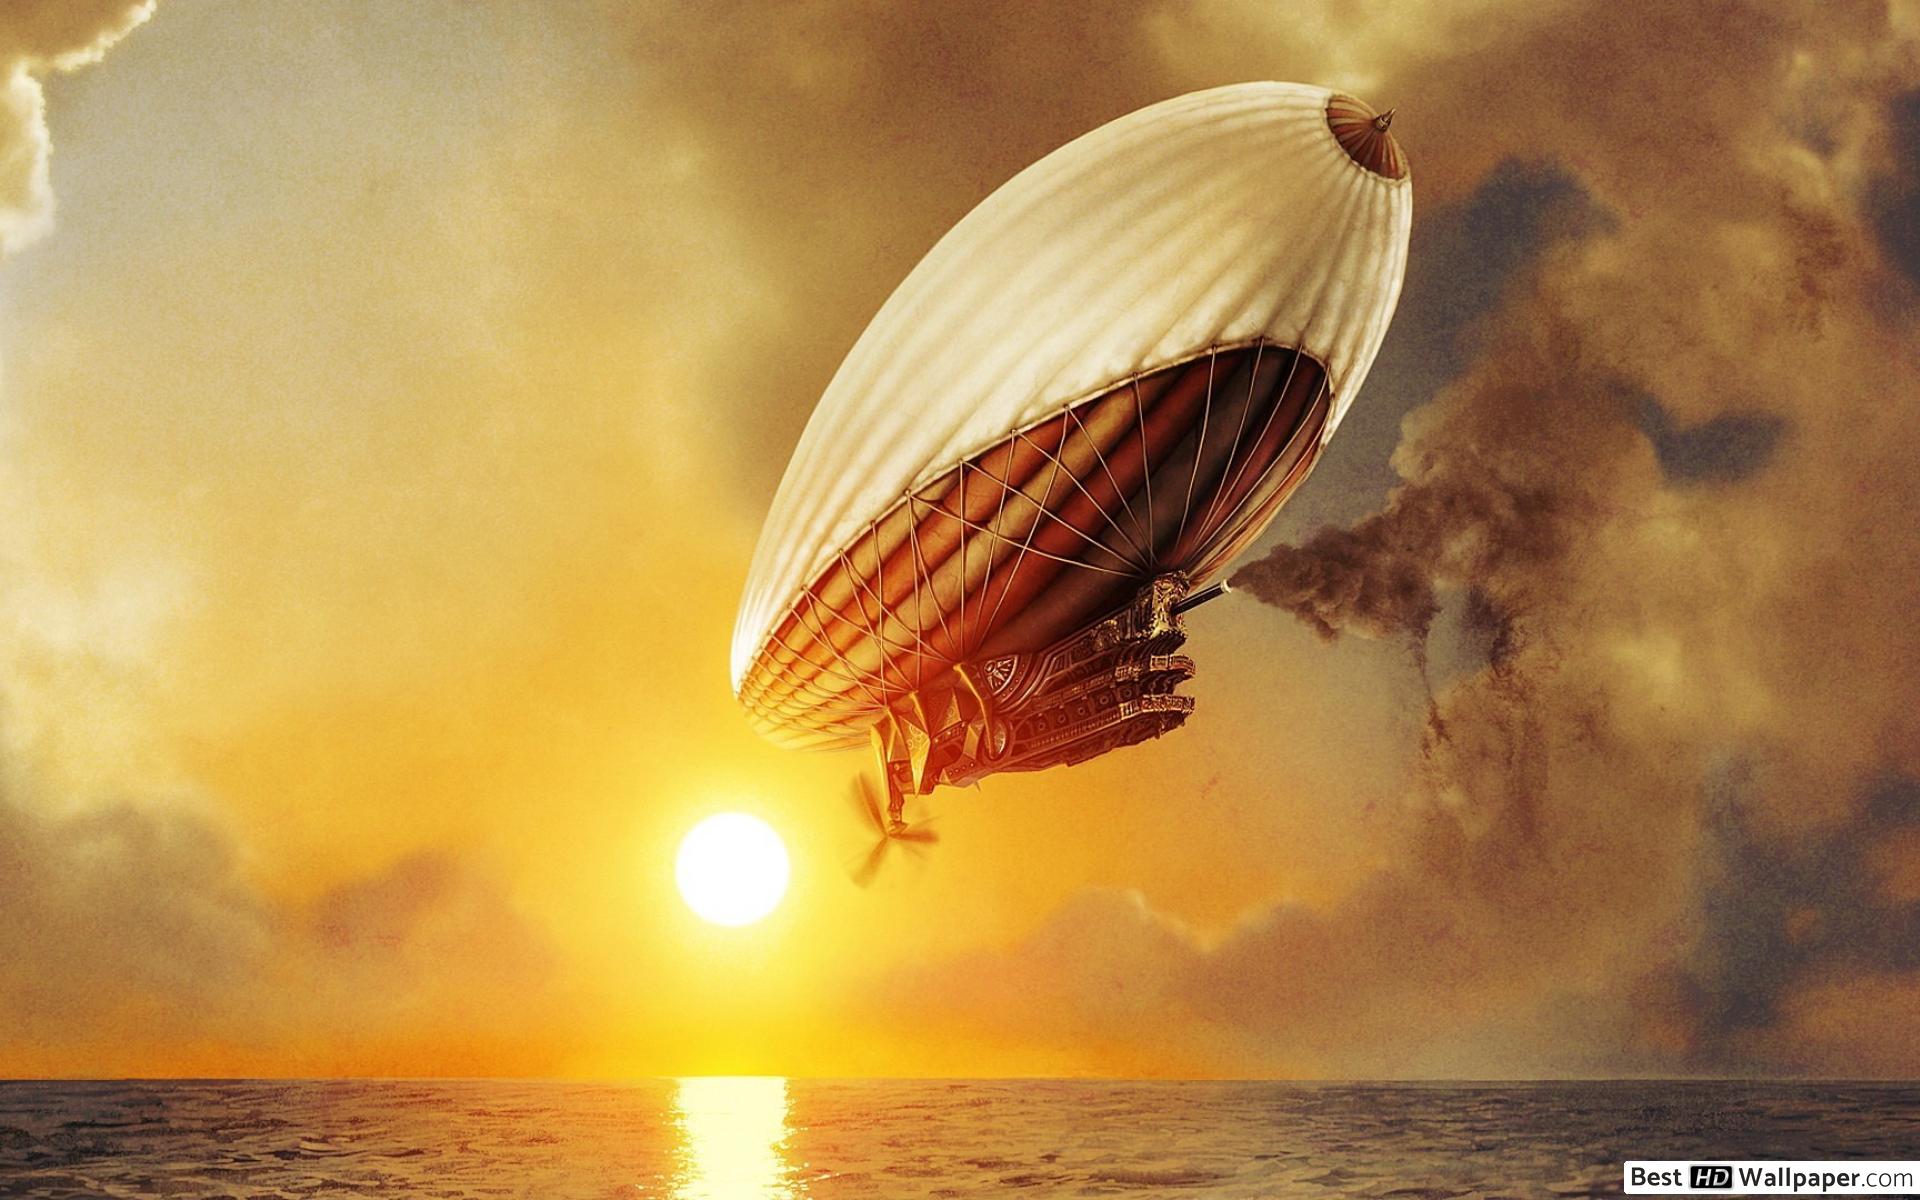 Blimp over the Ocean at Sunset HD wallpaper download